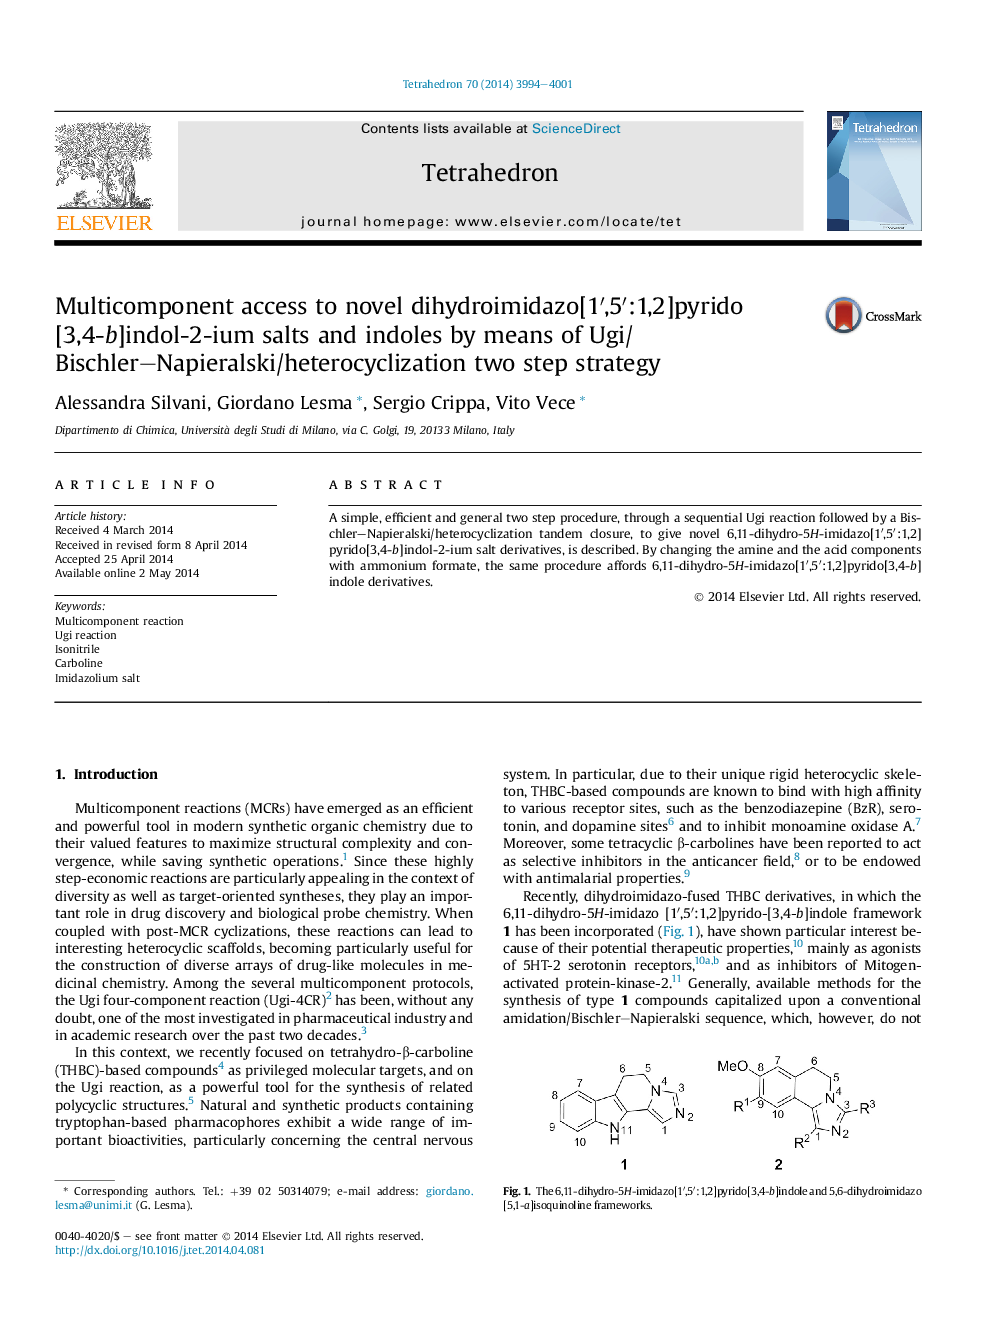 Multicomponent access to novel dihydroimidazo[1â²,5â²:1,2]pyrido[3,4-b]indol-2-ium salts and indoles by means of Ugi/Bischler-Napieralski/heterocyclization two step strategy